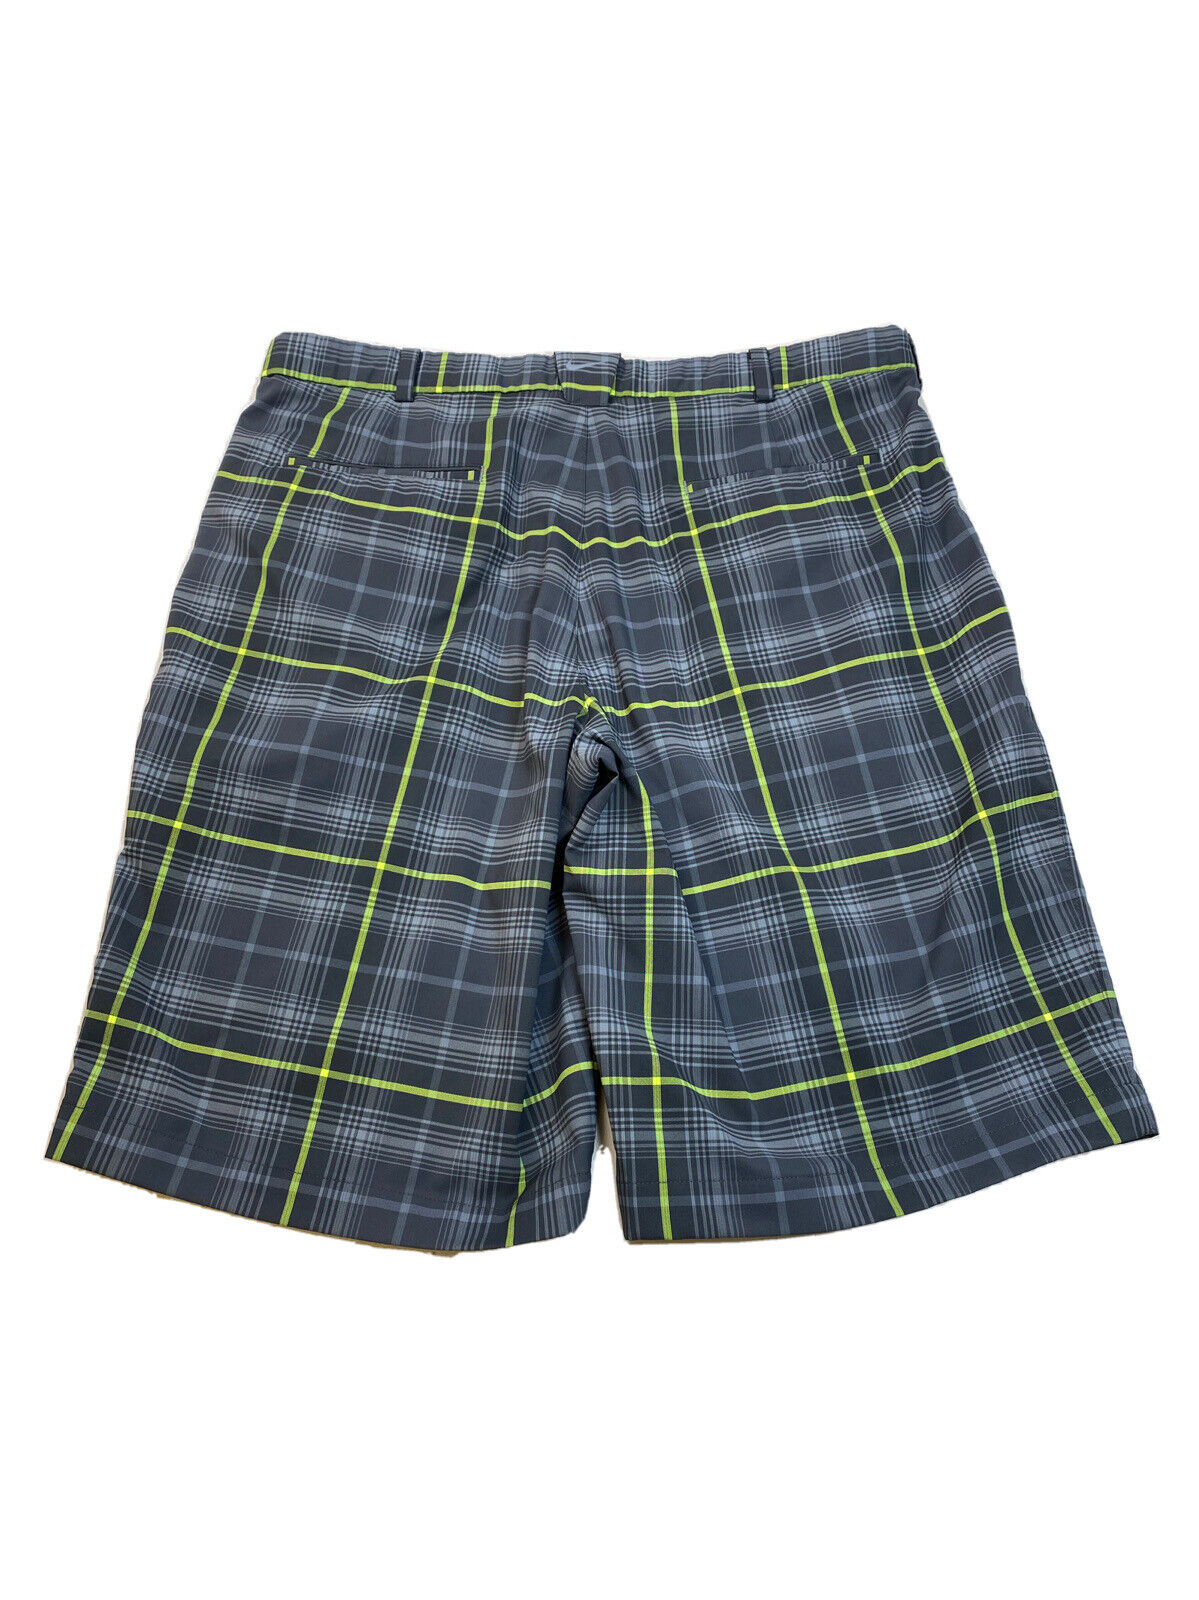 Nike Men's Gray/Yellow Dri-Fit Golf Athletic Shorts - 36